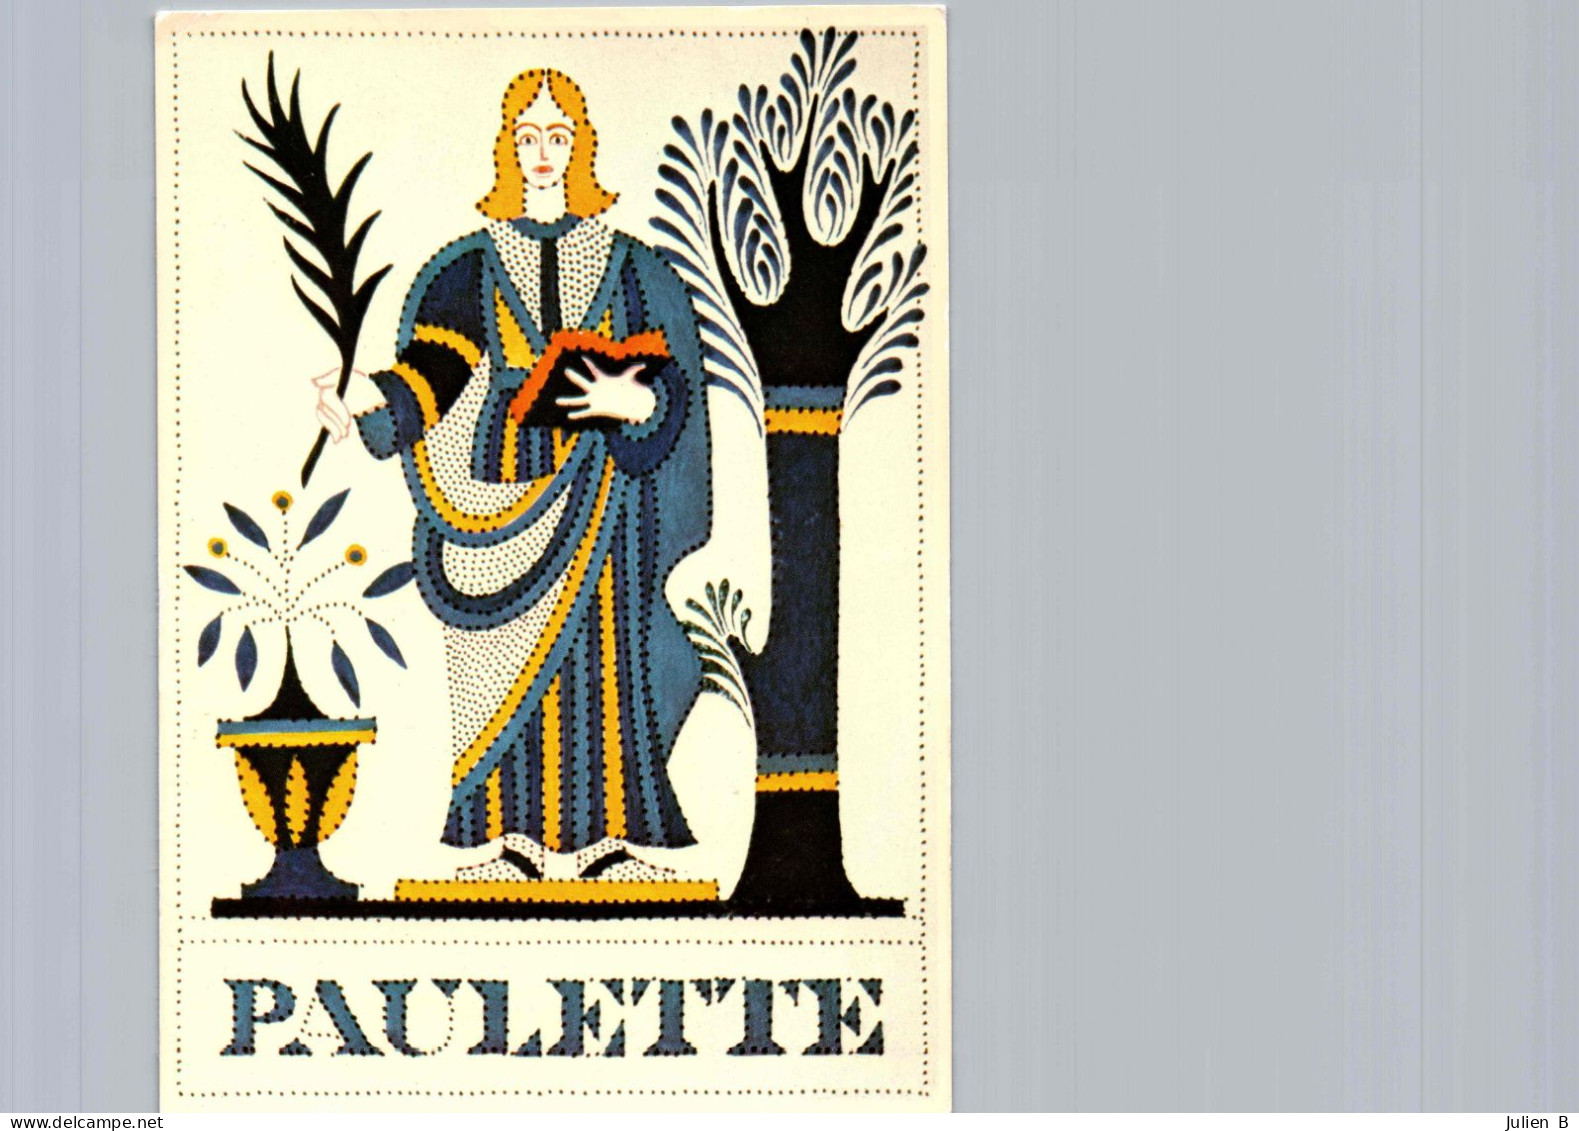 Paulette, Edition Betula - Nomi